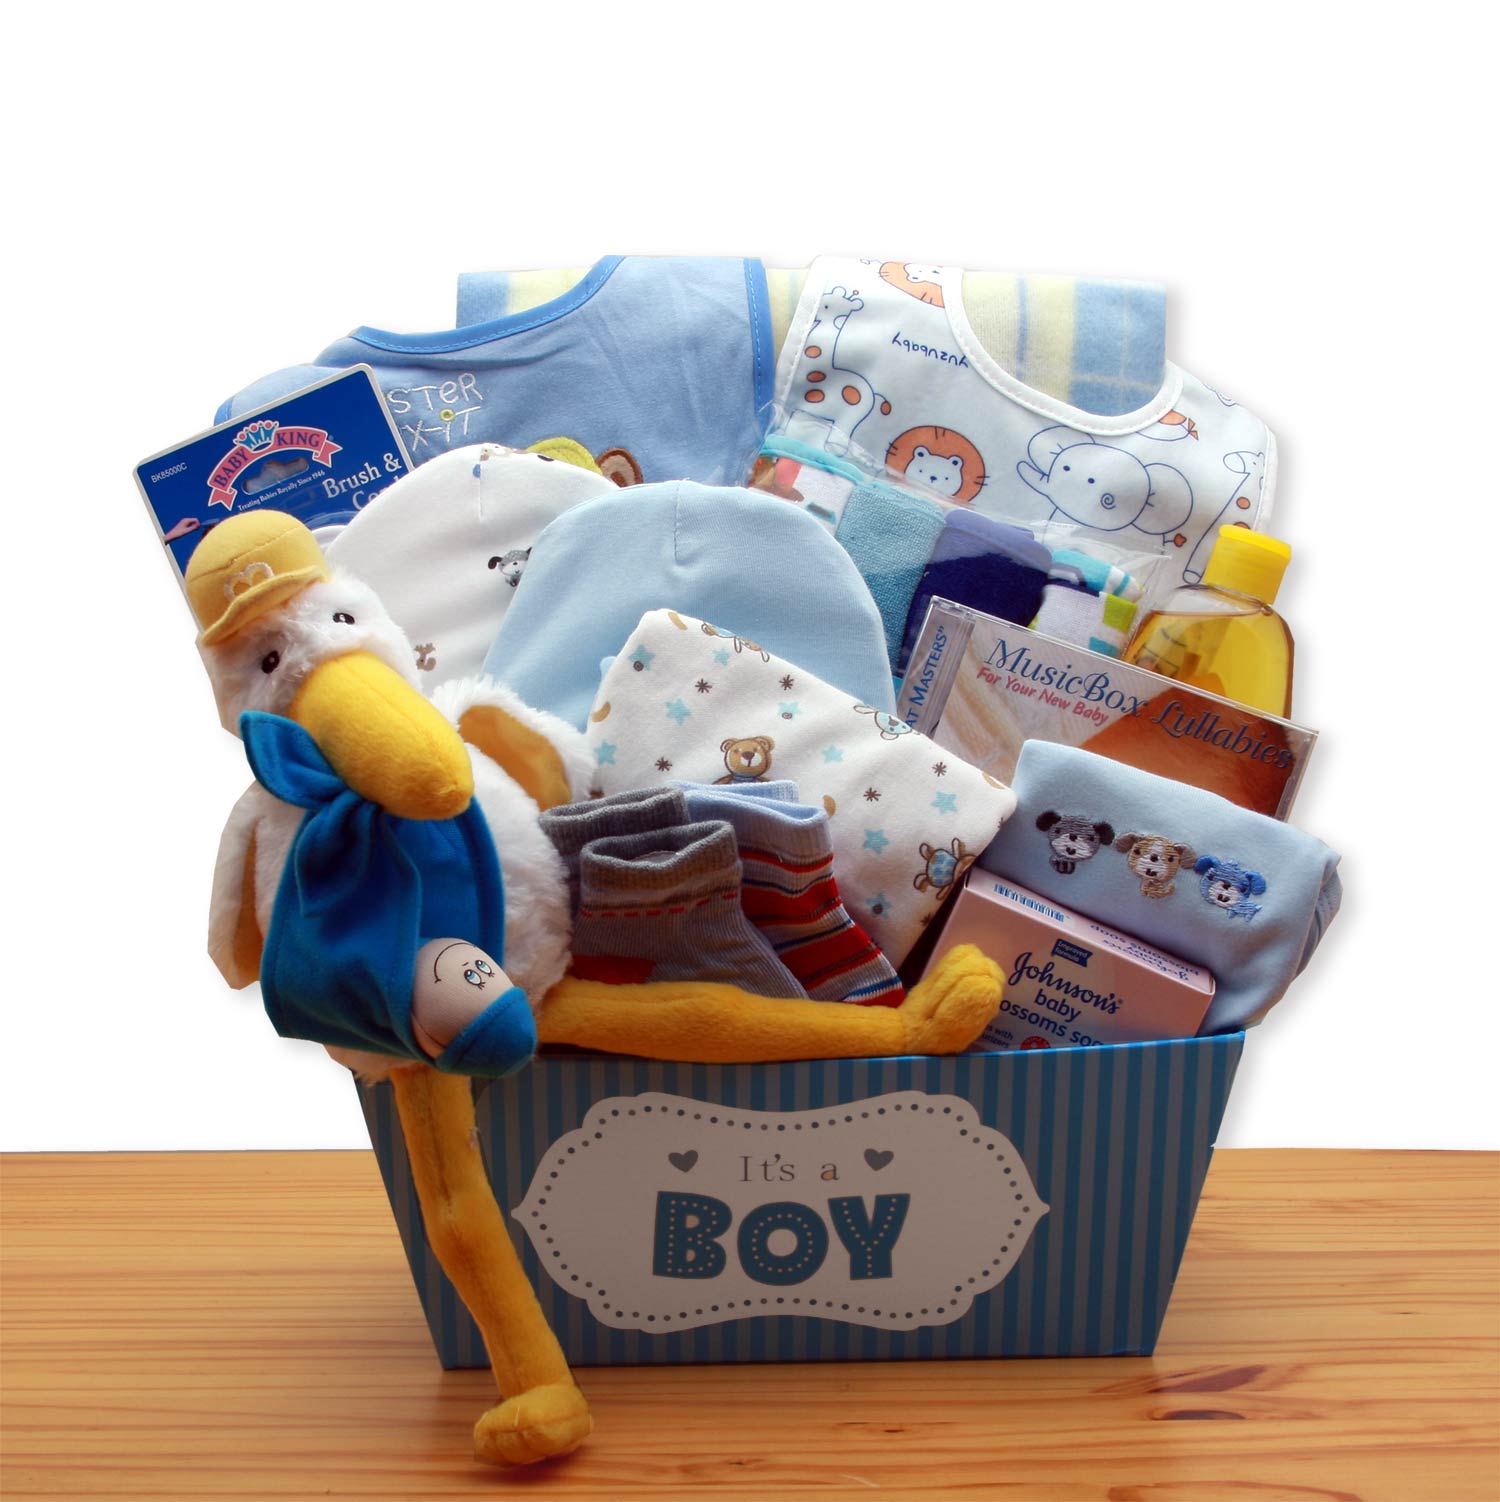 Baby Gift Baskets - Baby Boy Shower Basket